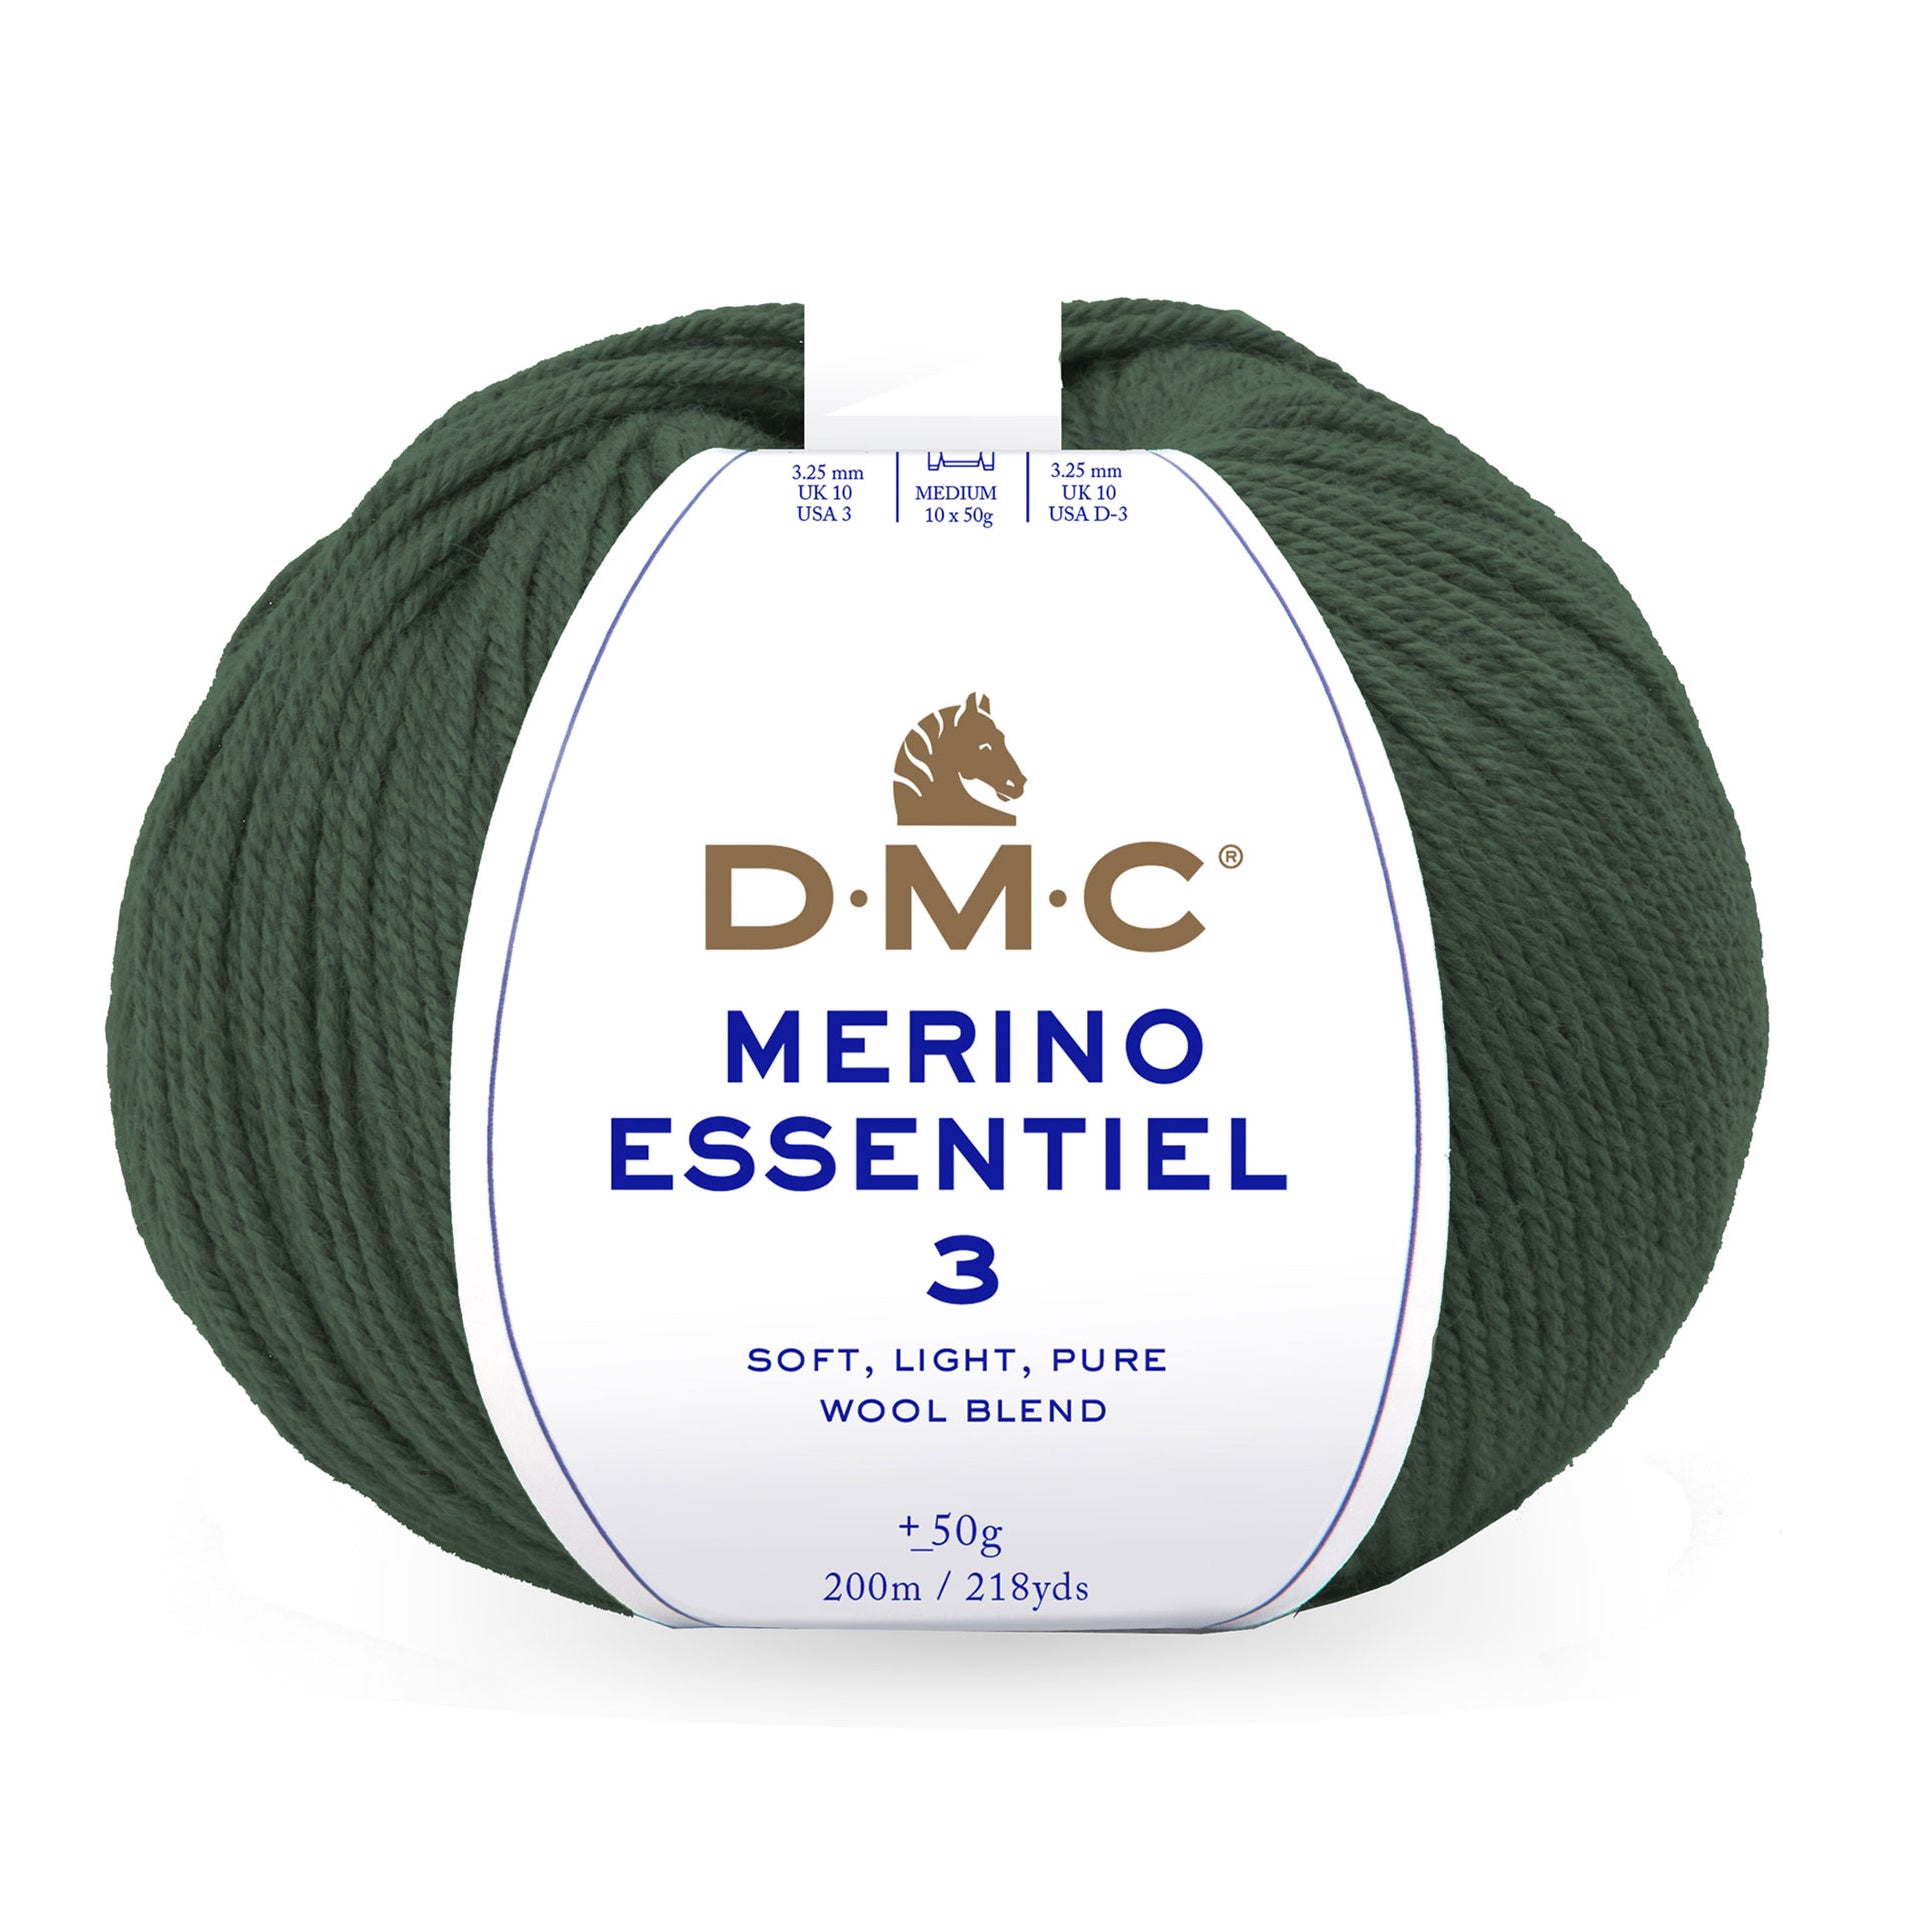 DMC Merino Essentiel 3 - High quality Merino wool and acrylic for knitting warm and soft garments